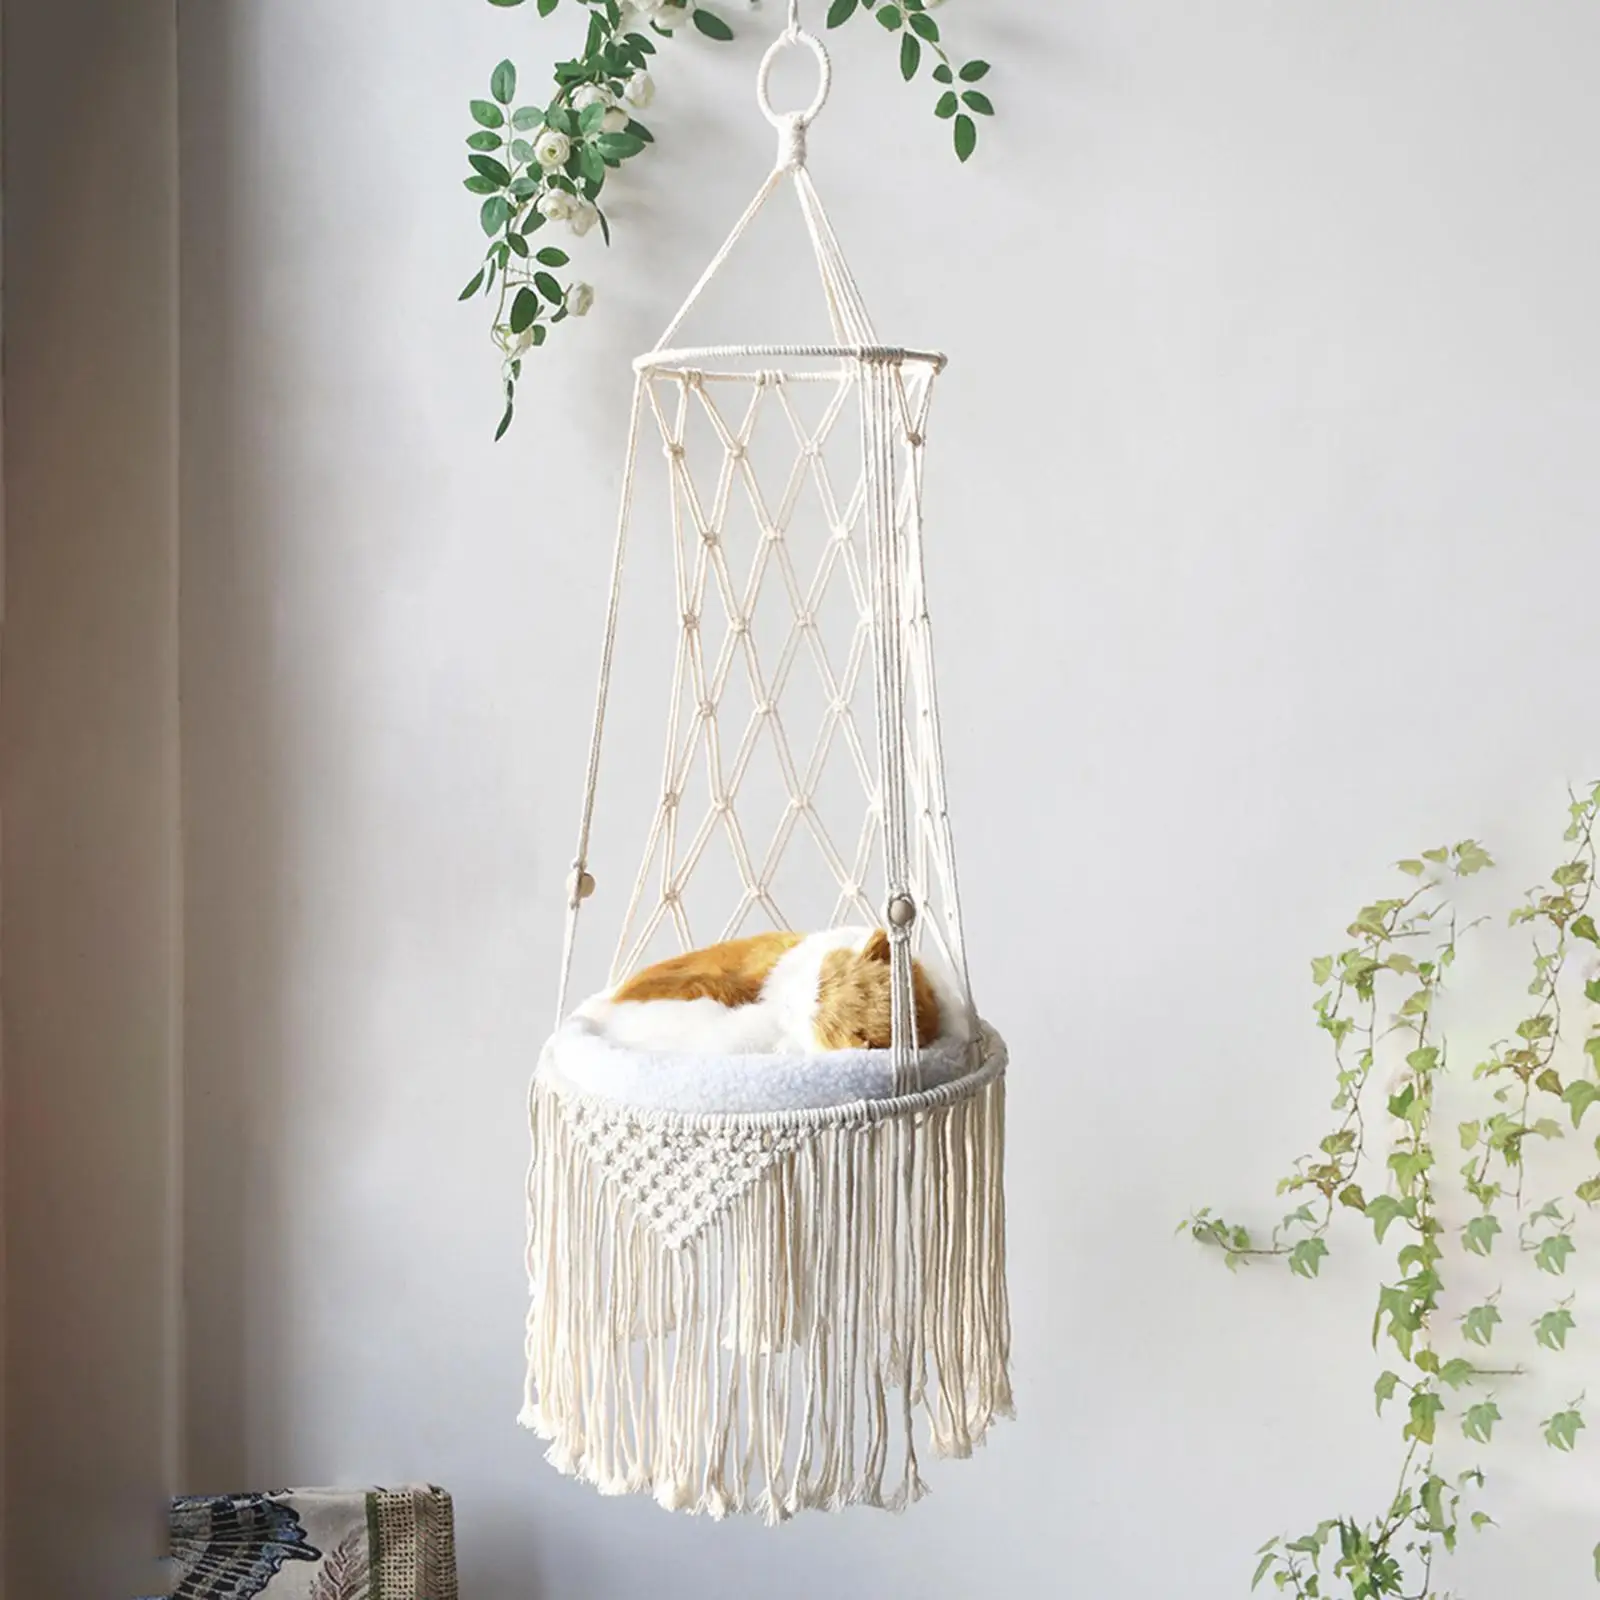 Hanging Cat Hammock Hand Woven Decoration Tassel Cotton Rope Beige Gifts Pet Swing Bed Basket Cat Cage for Indoor Outdoor Garden